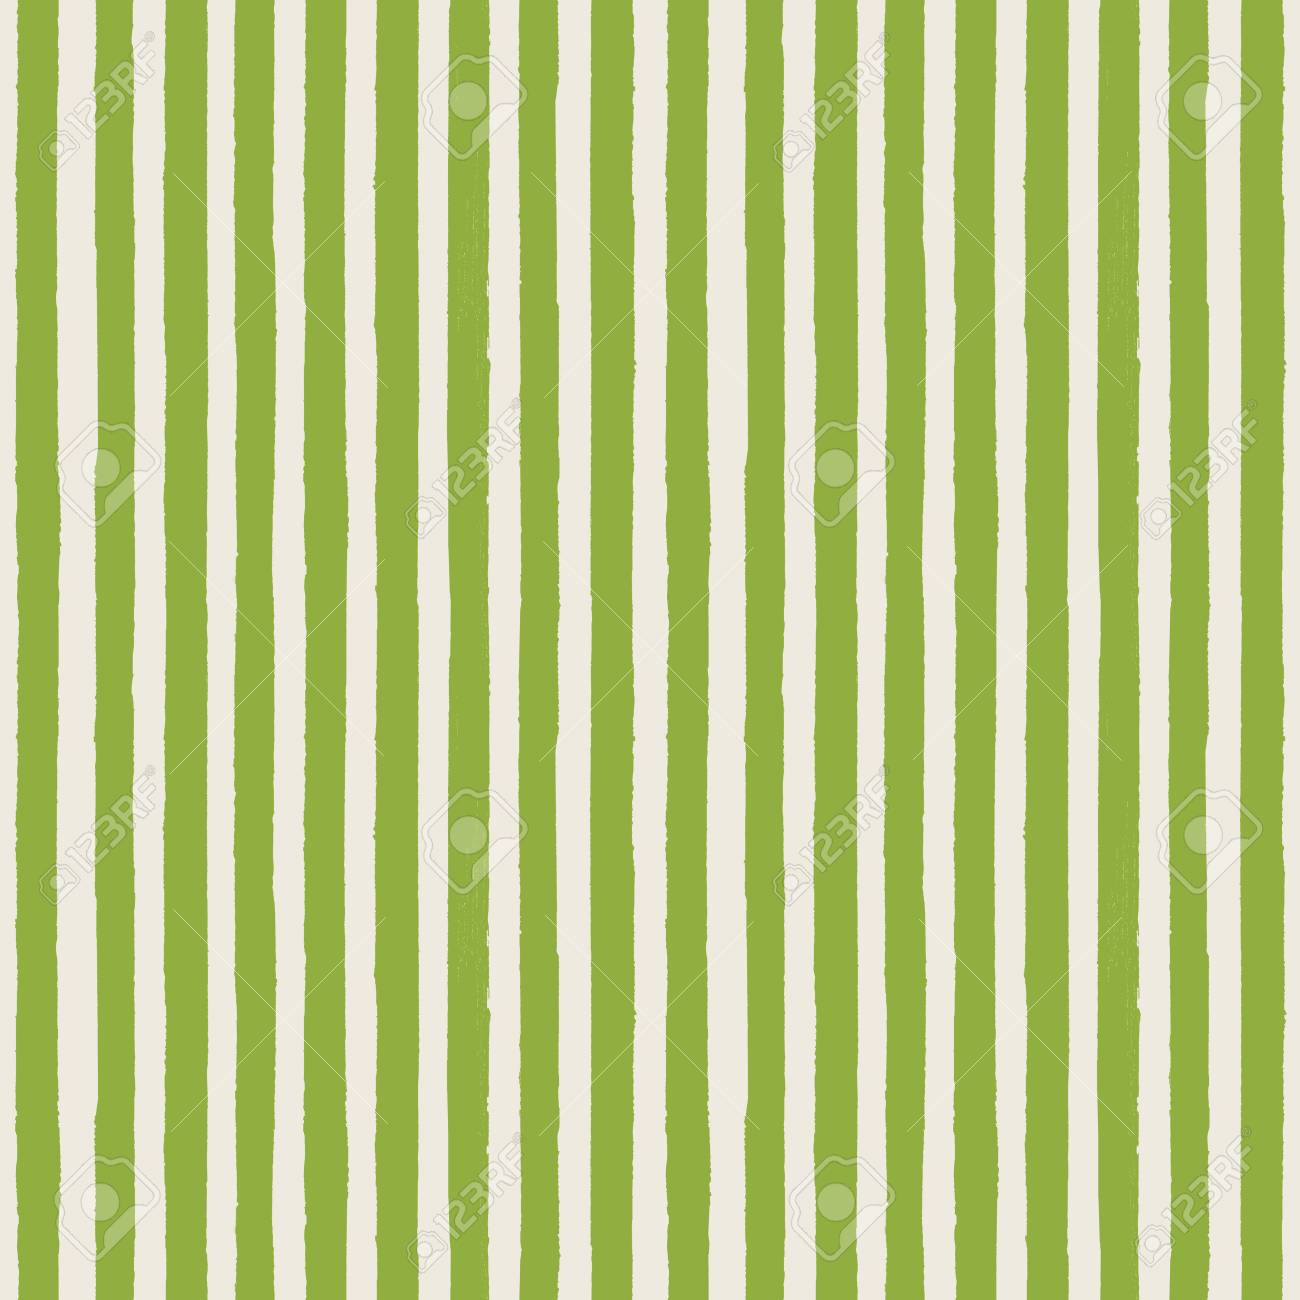 Vintage Color Green Stripe Background Old Aged Paper With Ink